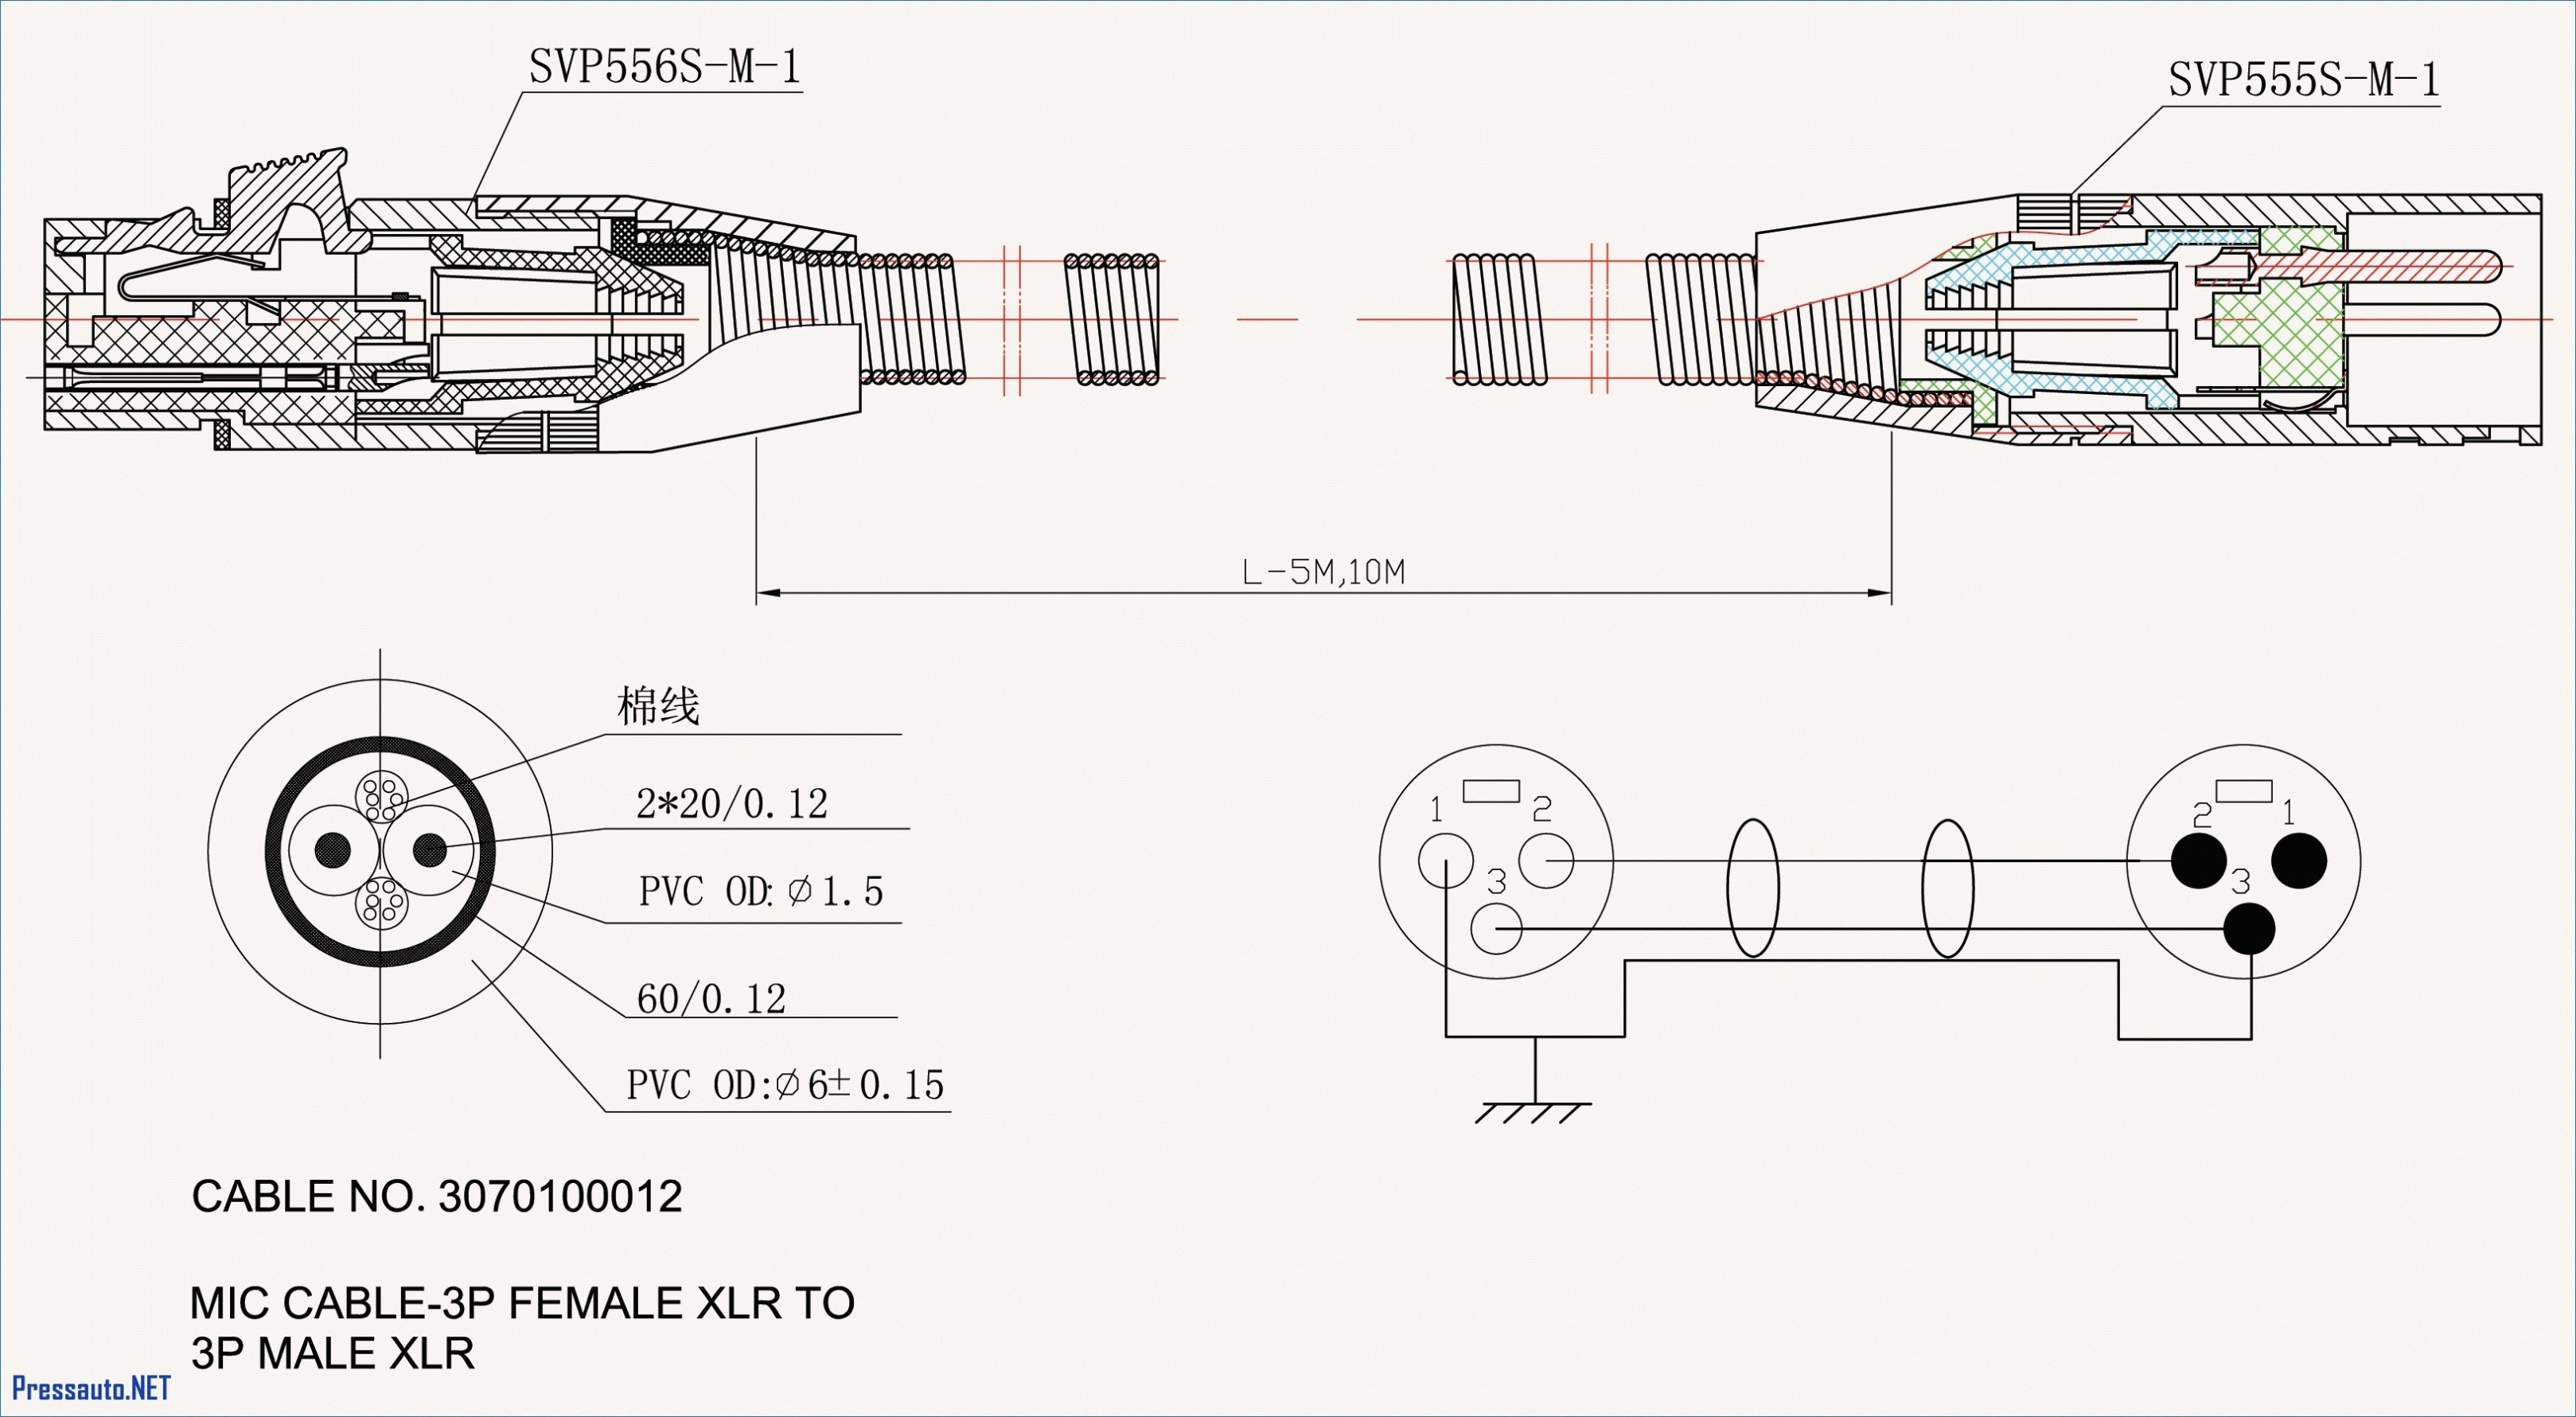 Car Audio System Diagram Wiring Diagram for A Car Stereo Fresh Wiring Diagram for Car Audio Of Car Audio System Diagram